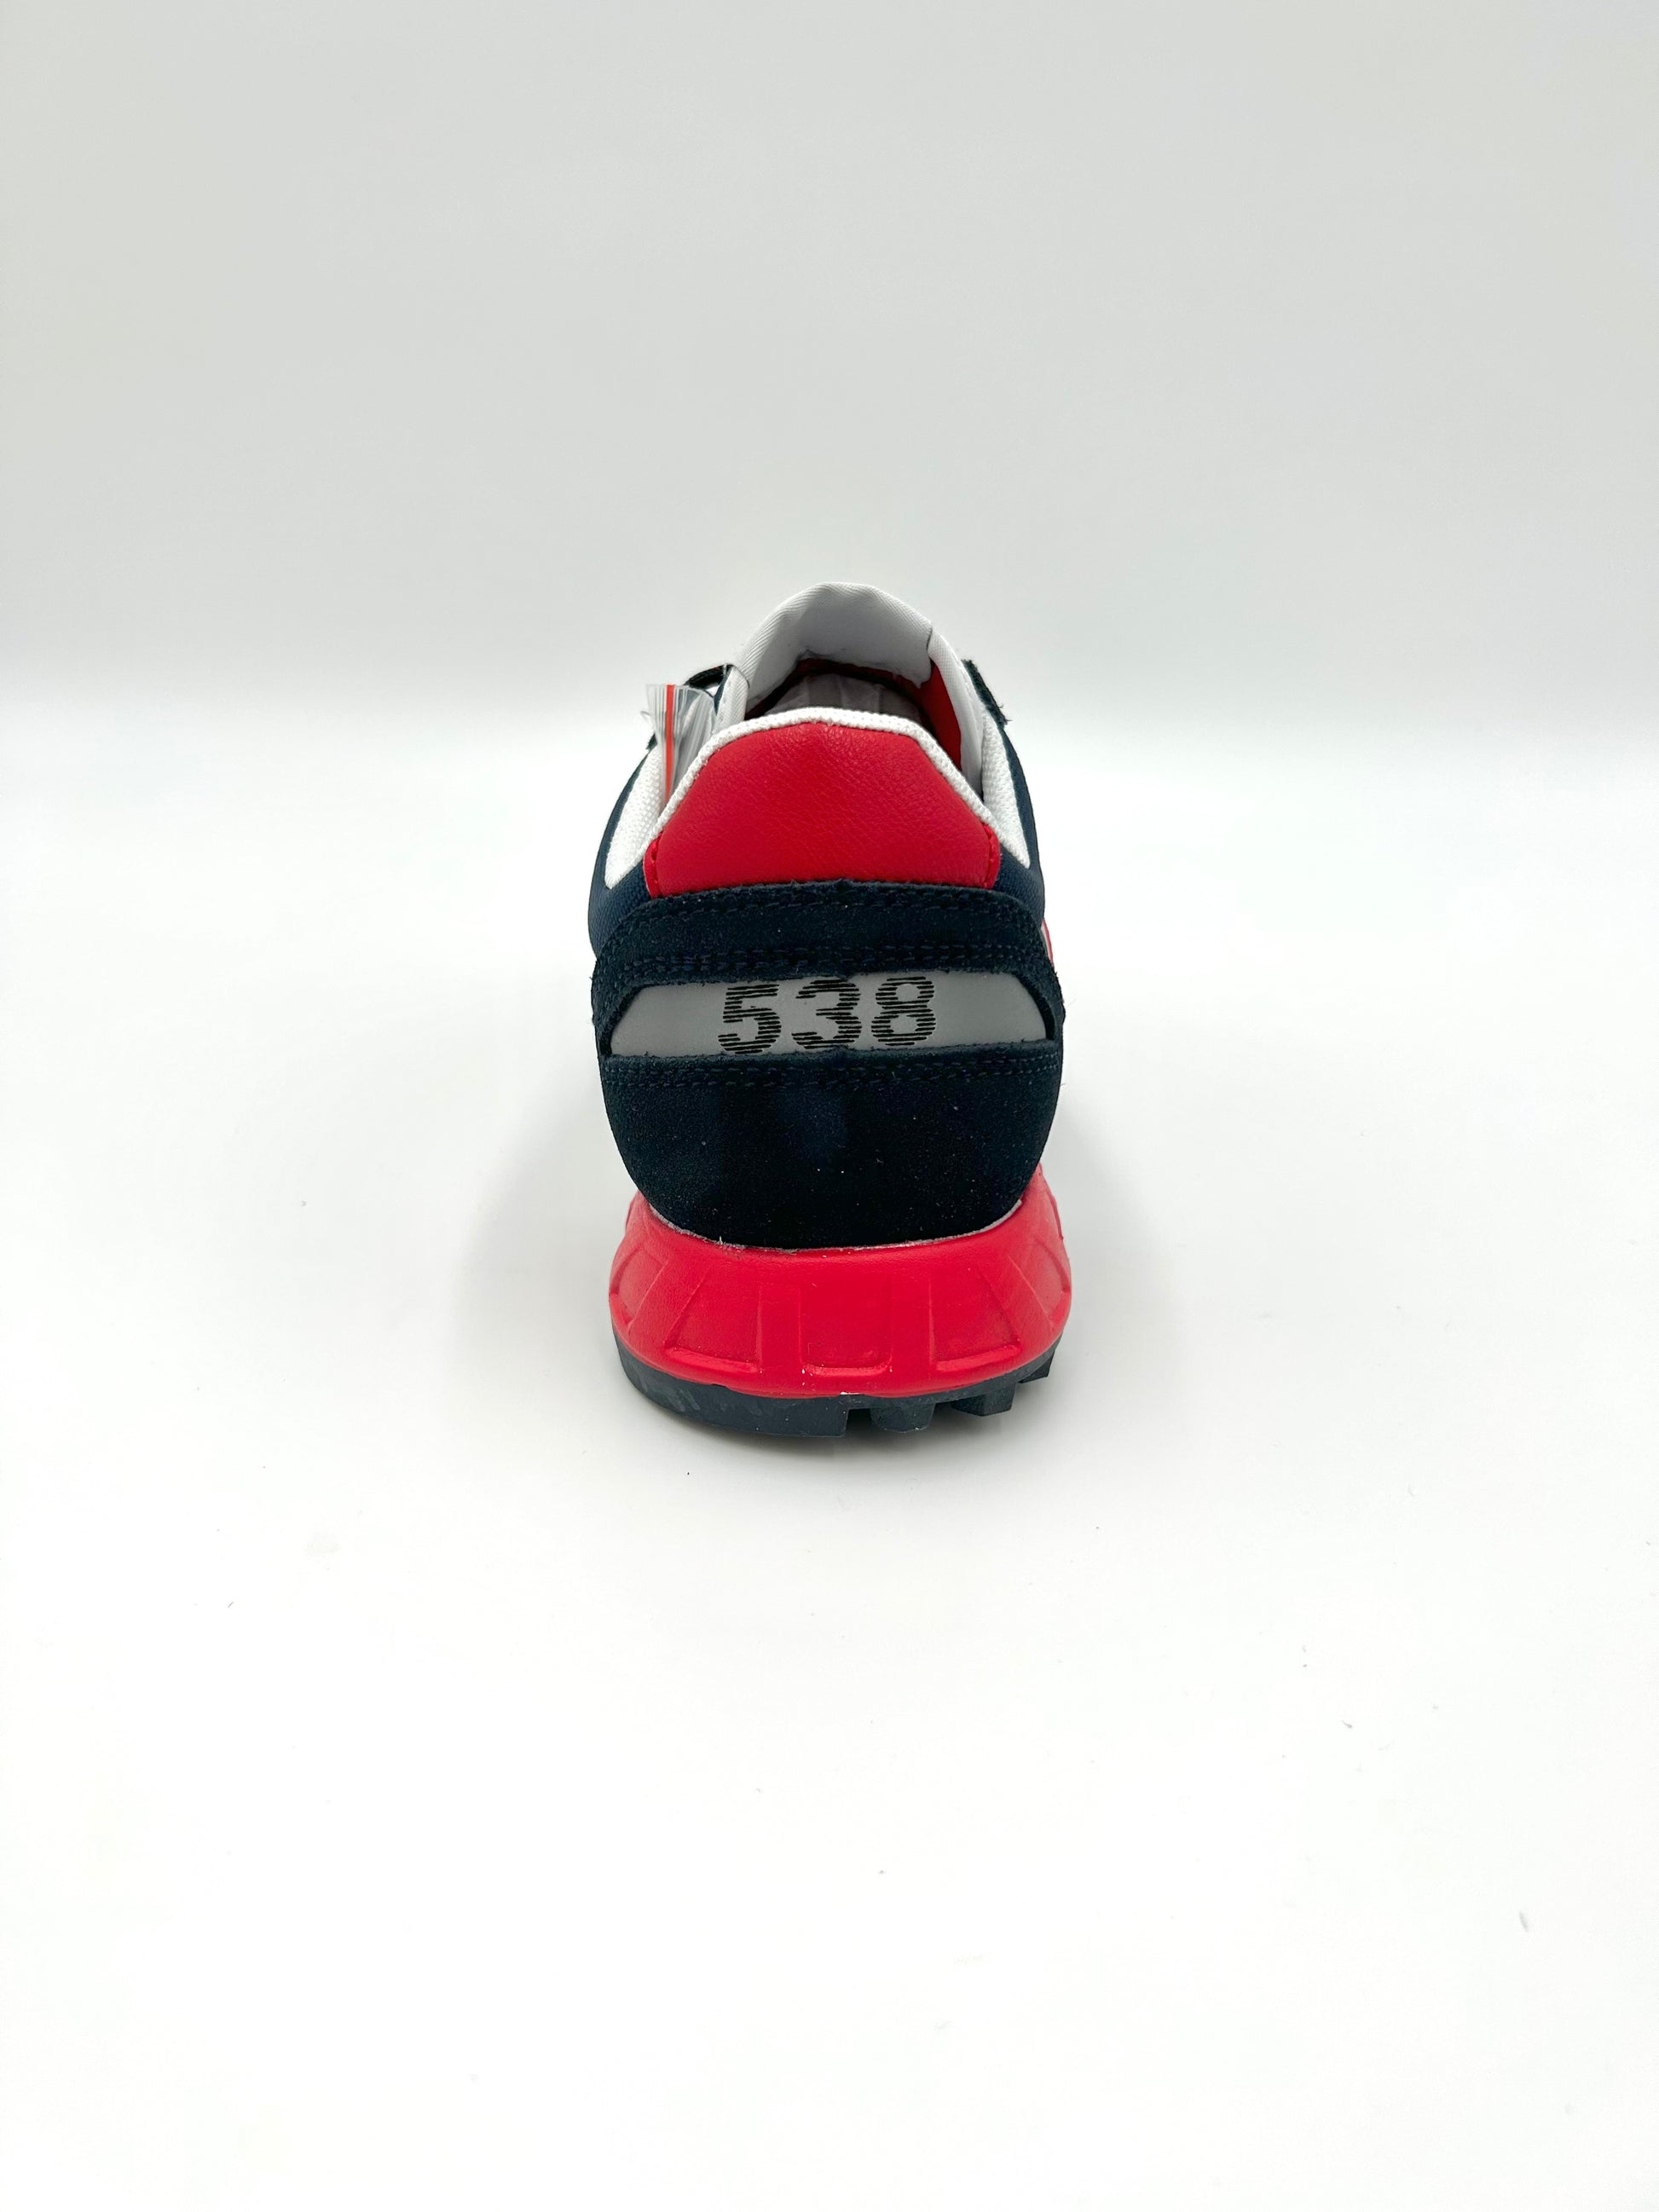 Etonic Sneakers KM 538 blue navy ETM 215605 03 - Etonic